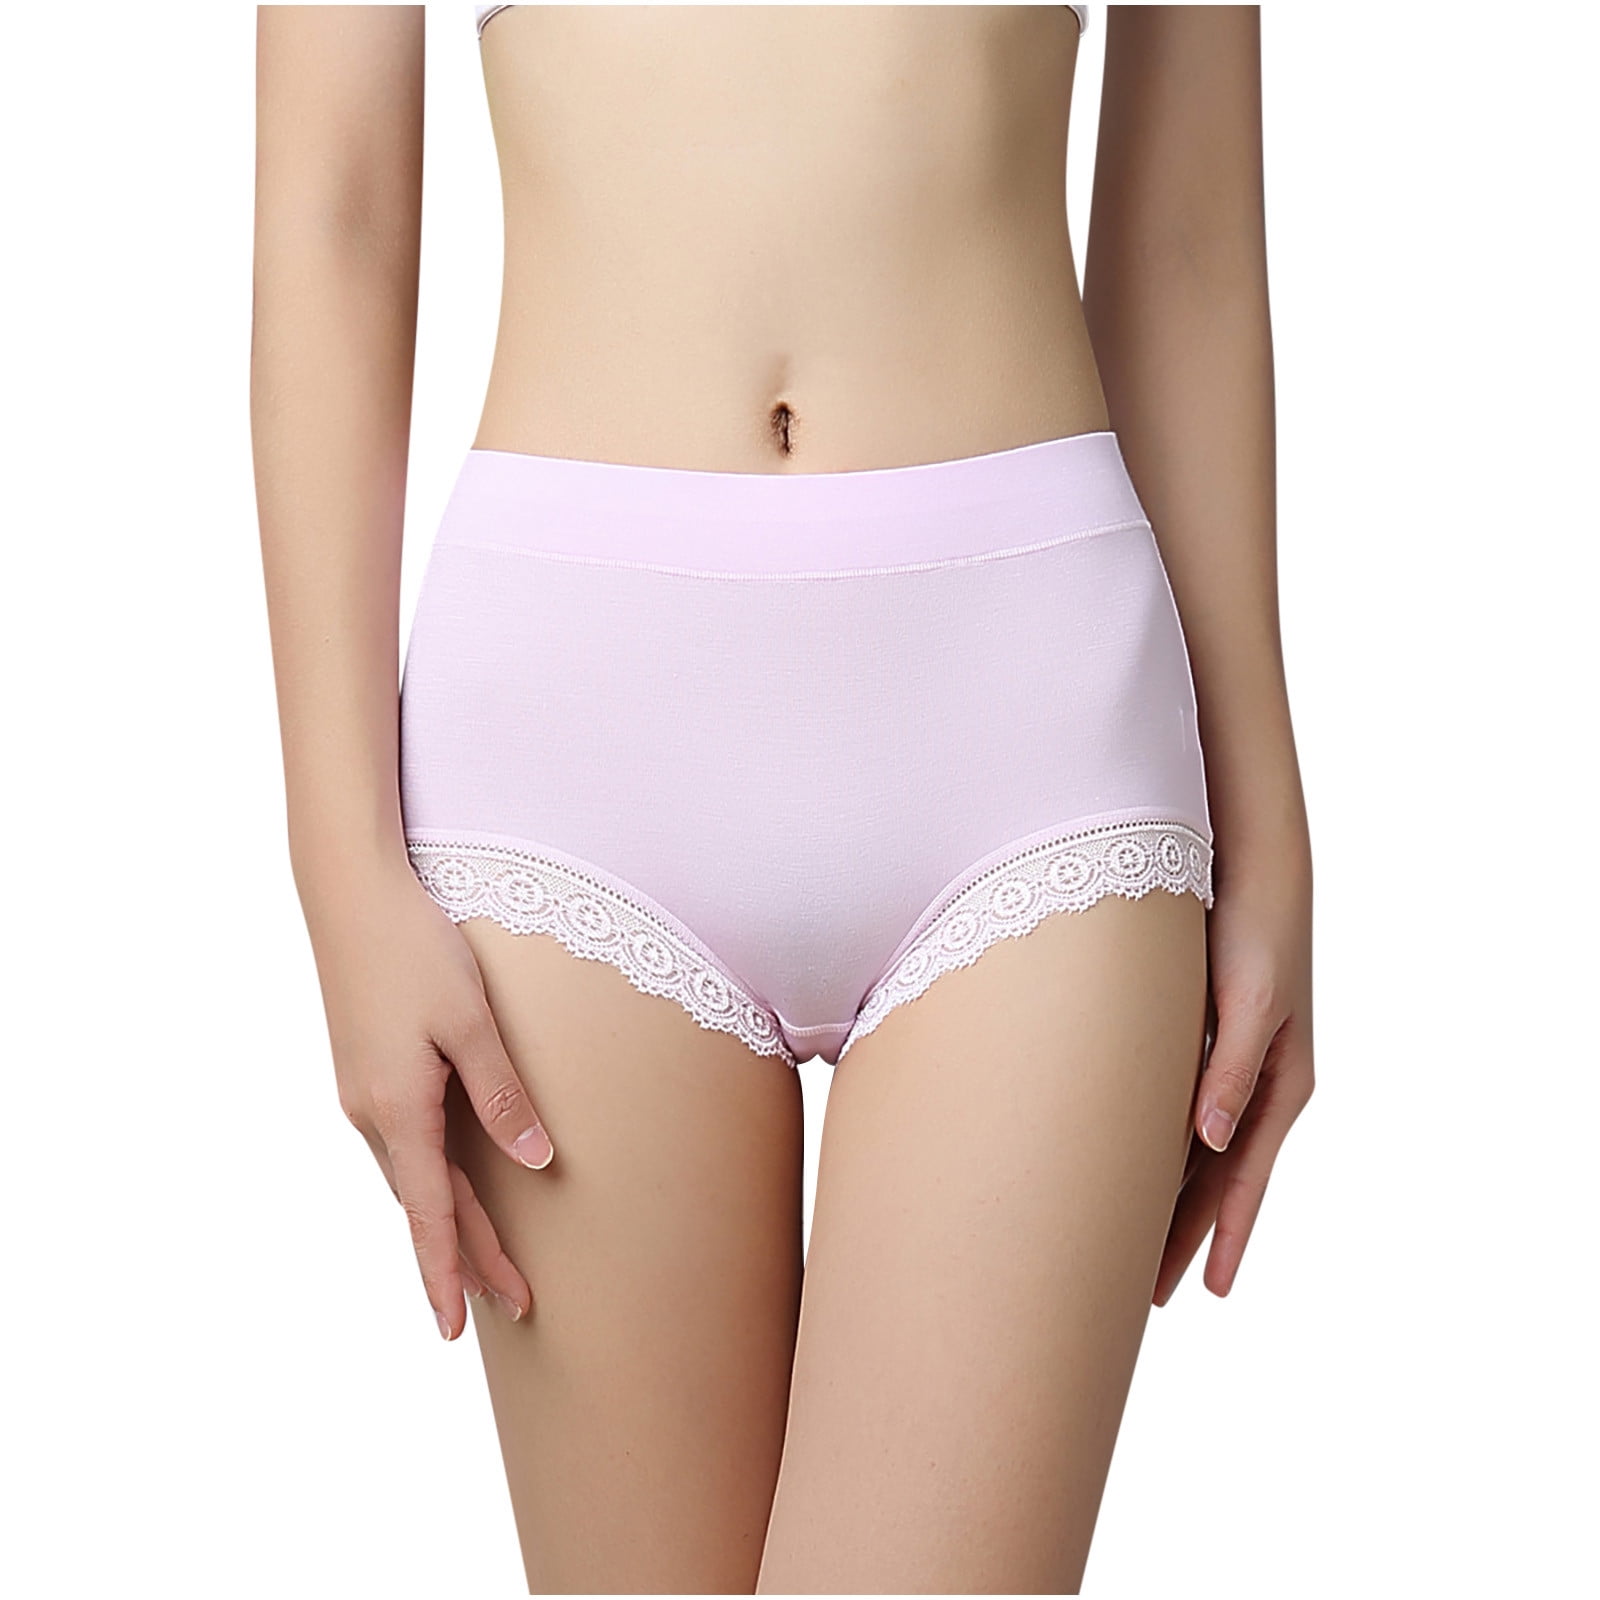 Tawop Women Girls Underwear Size 7 Women'S Large Underwear Medium